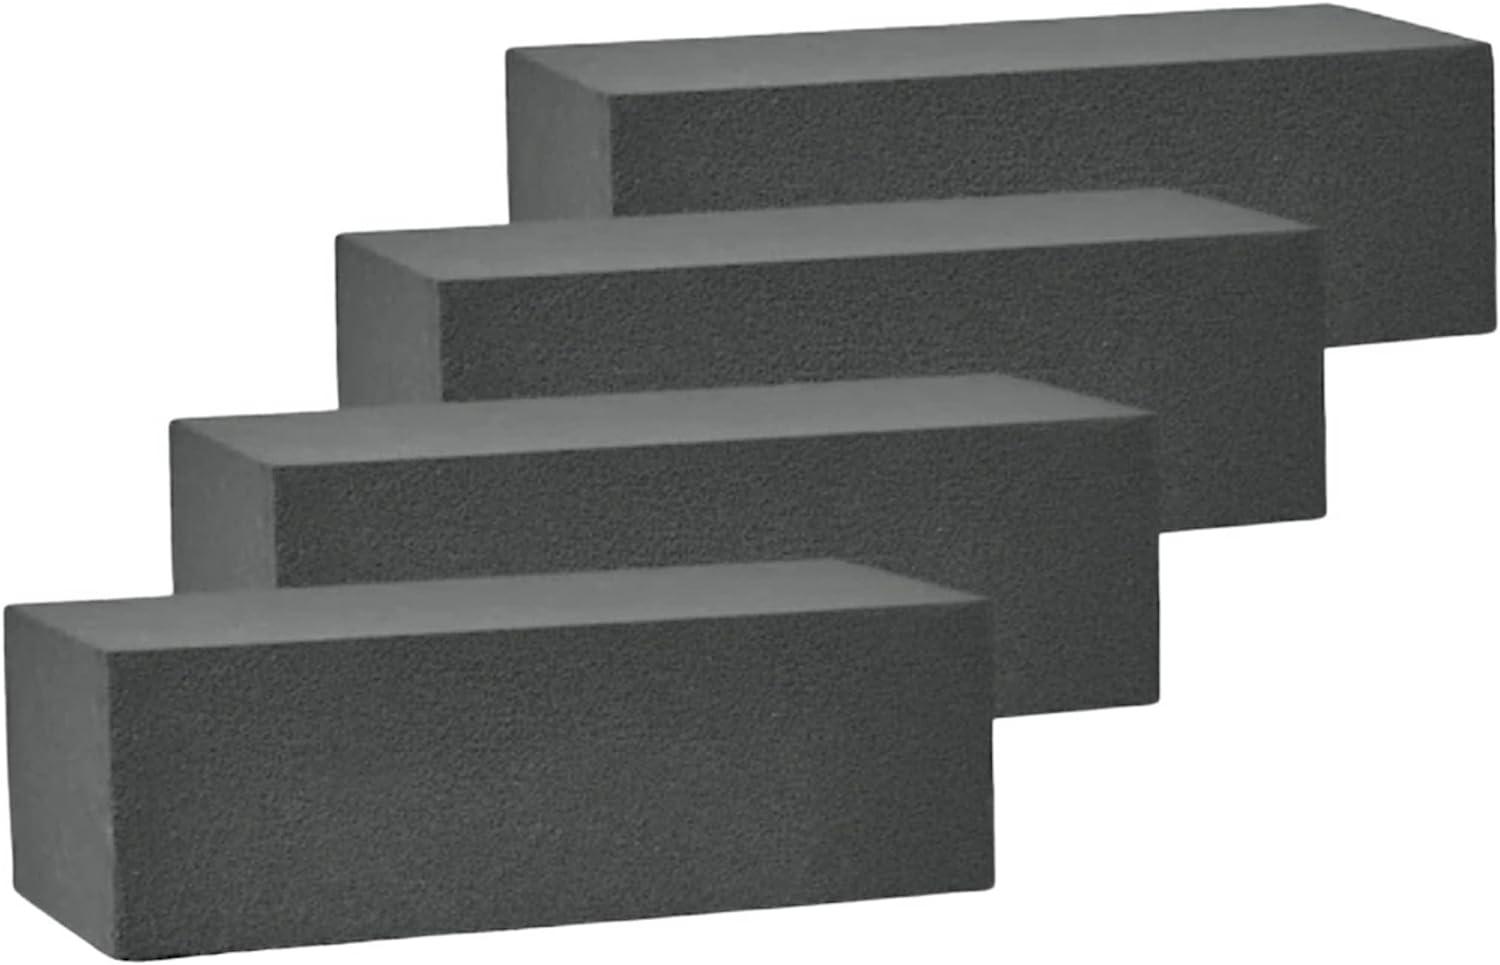 A foam bricks measuring 110 mm × 45 mm × 40 mm